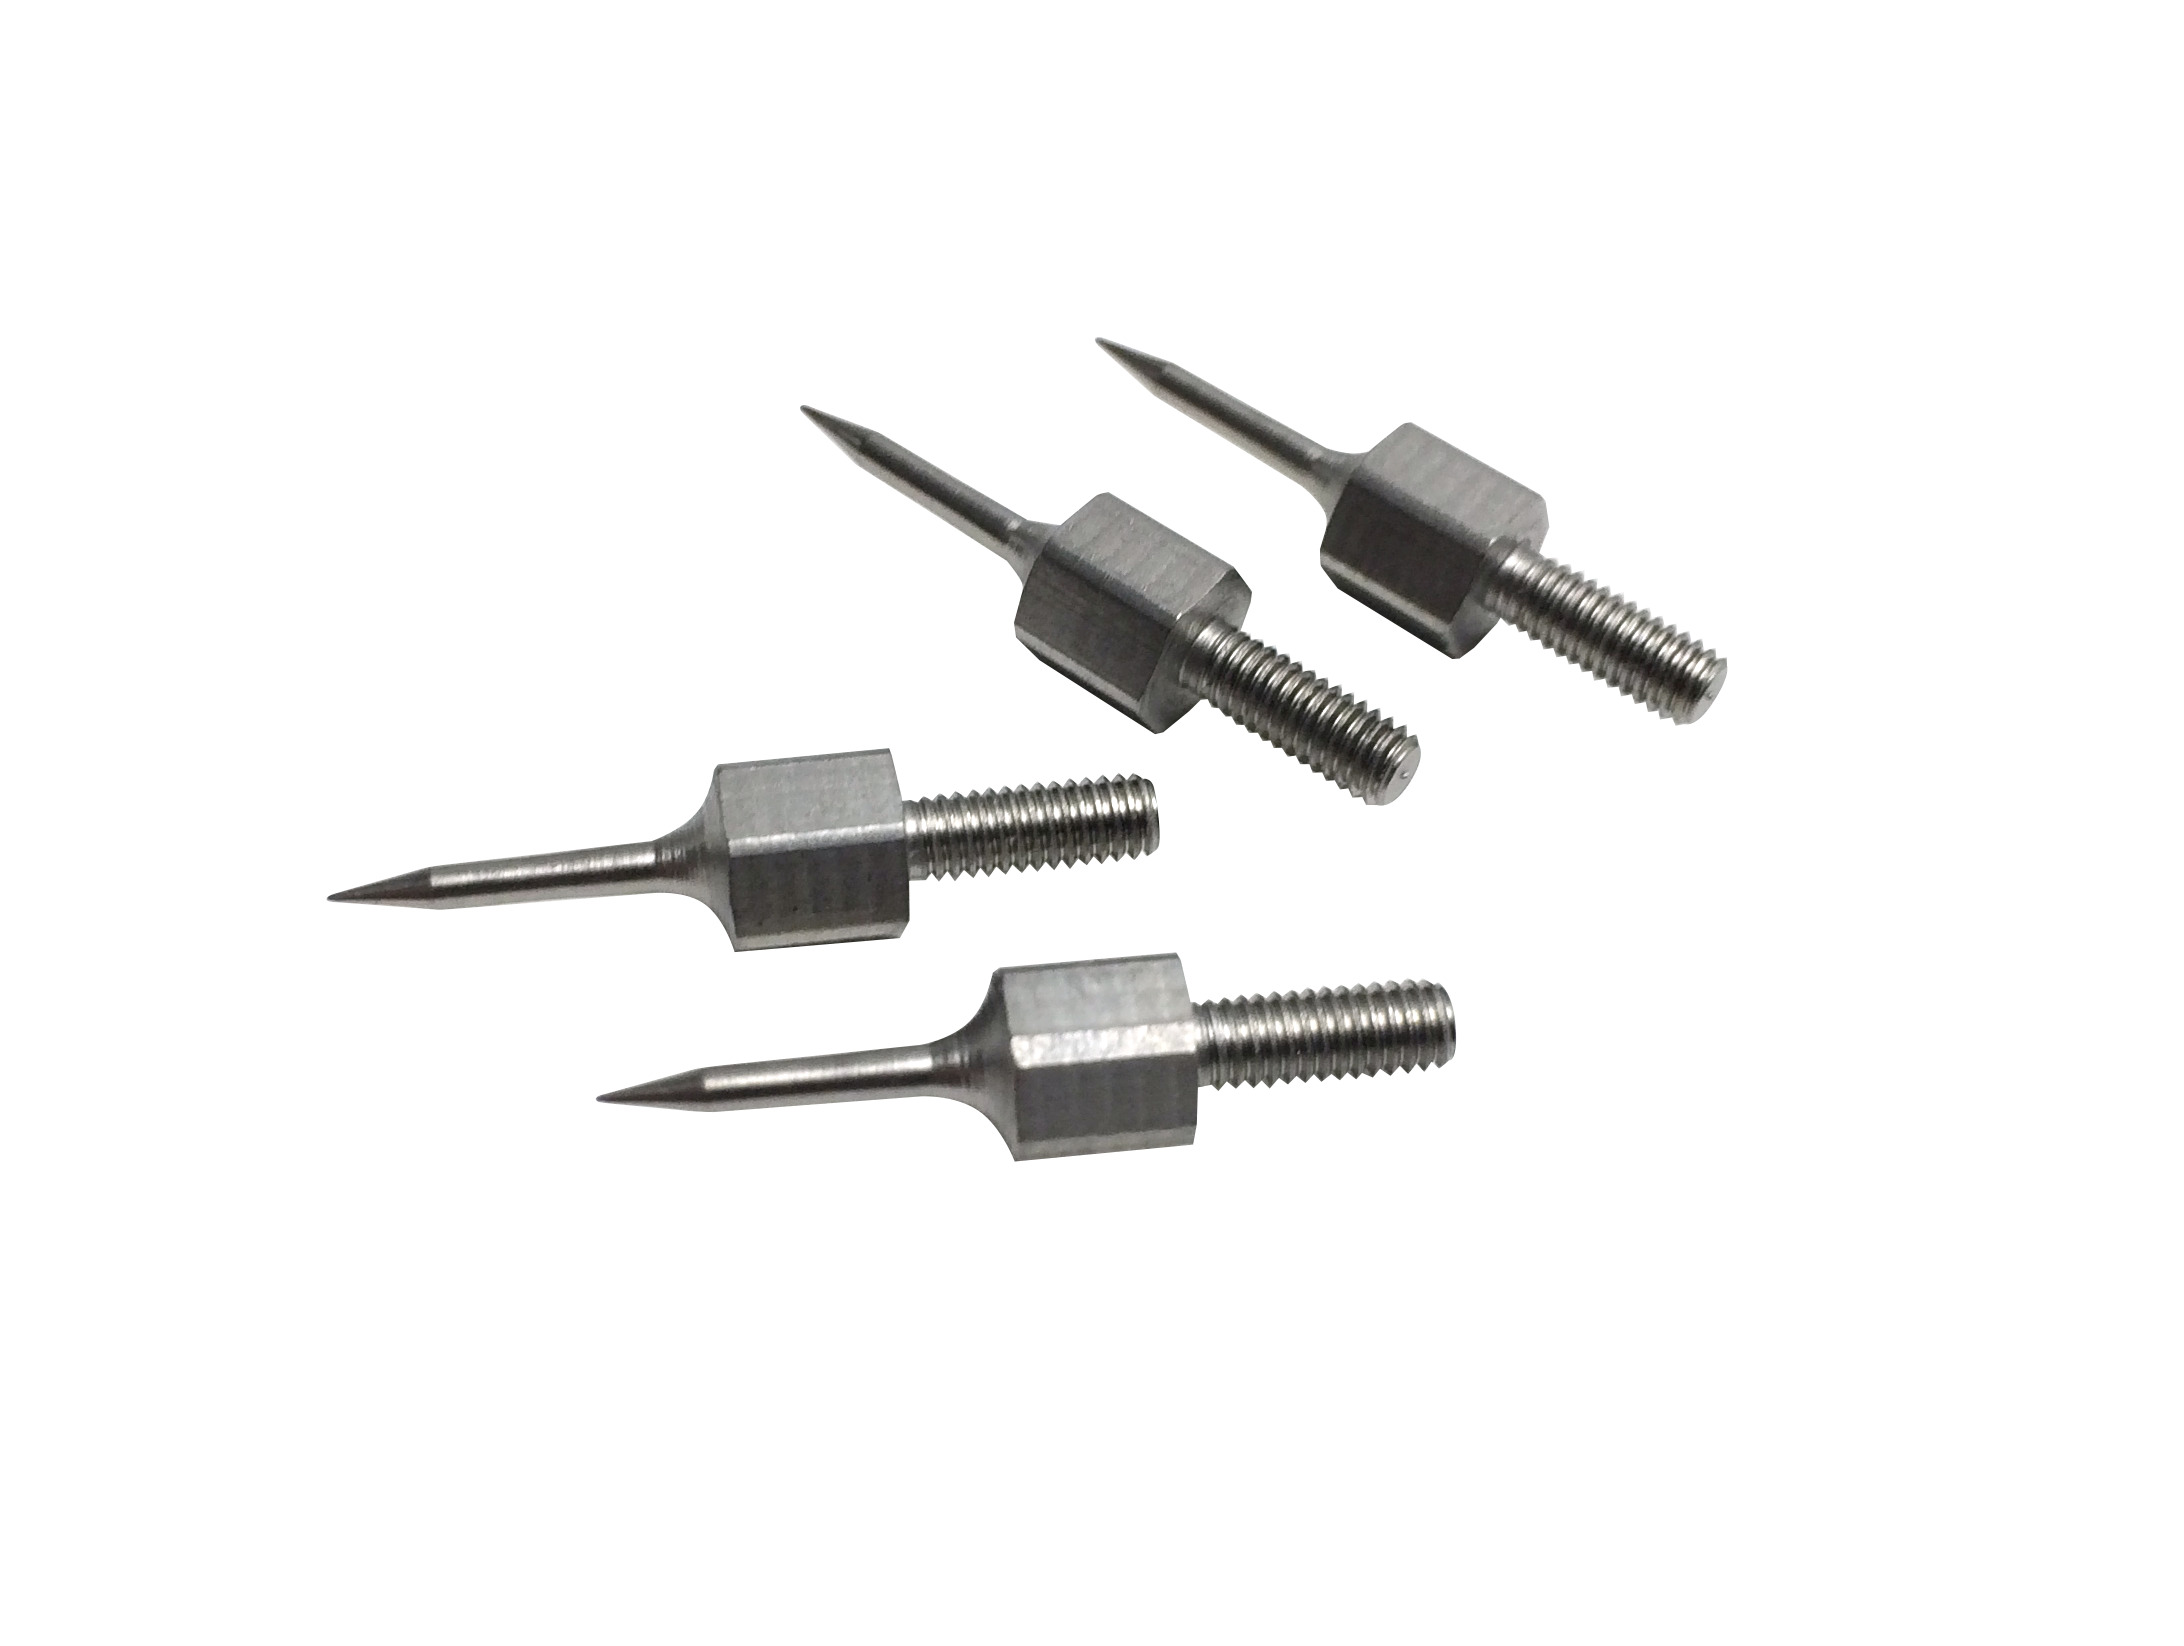 Replacement Pins, standard (MR05-PINS1)